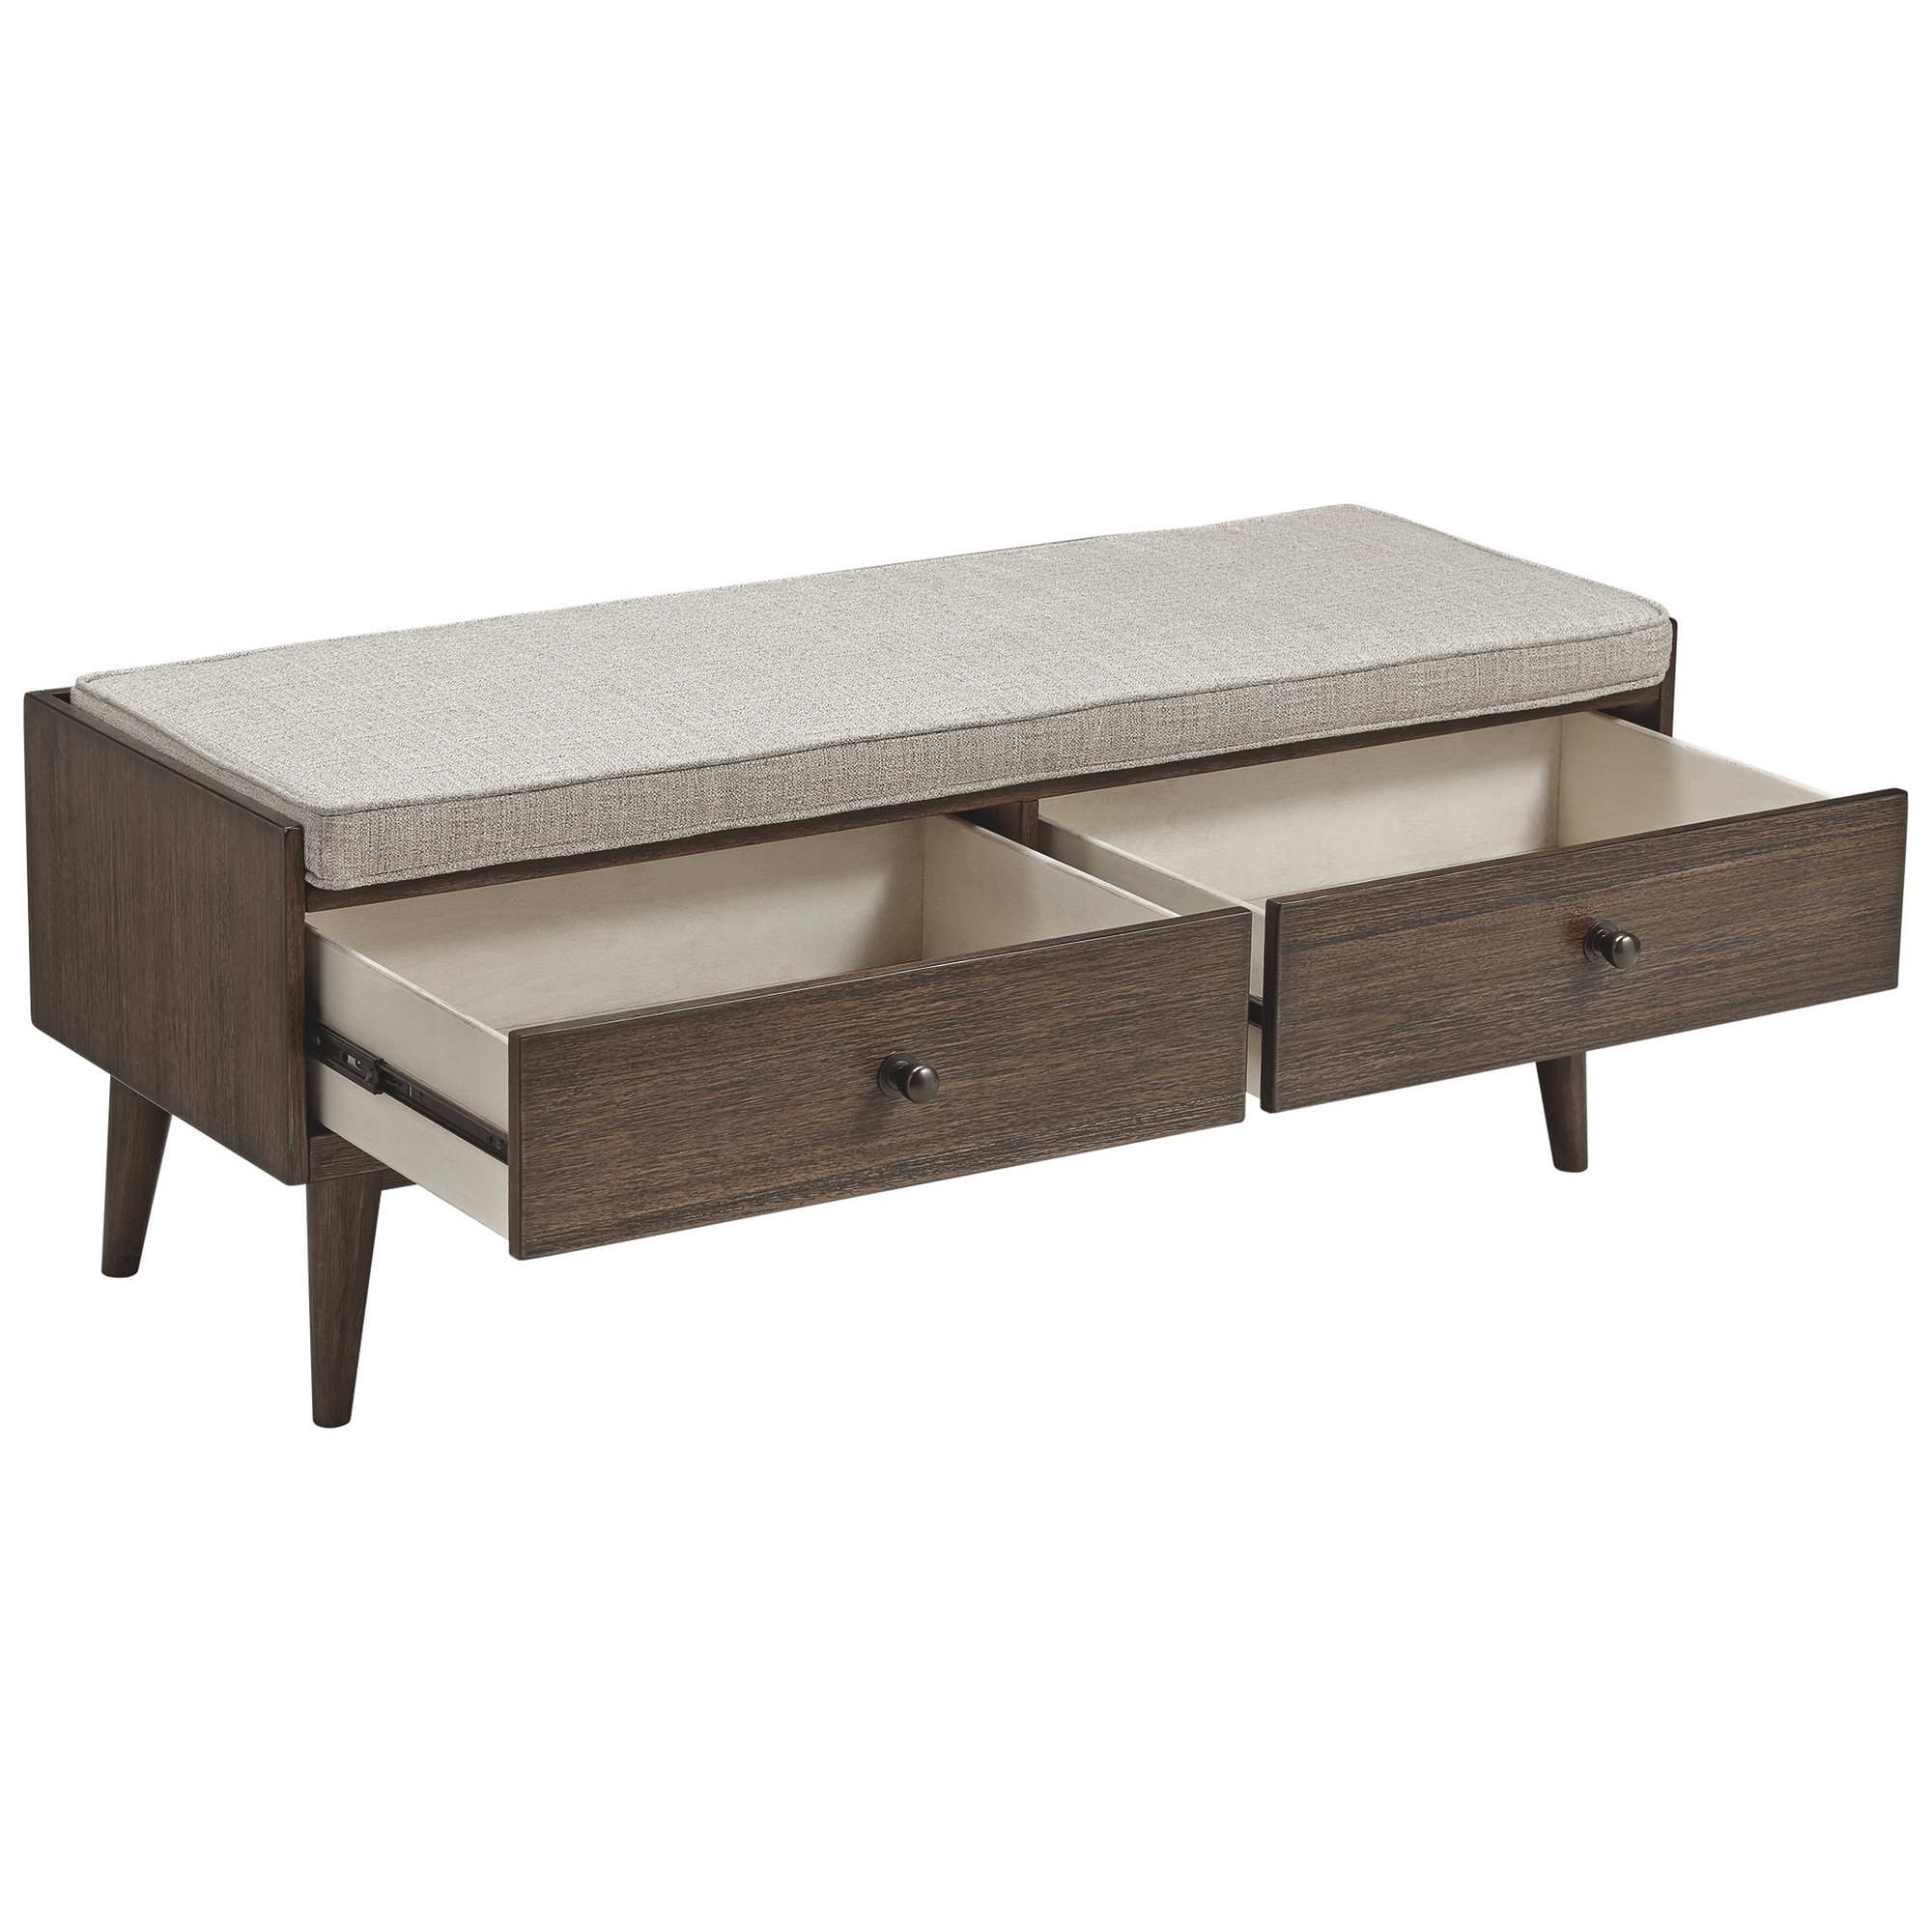 Reversible Fabric Seat Wooden Storage Bench With 2 Drawers, Taupe Brown- Saltoro Sherpi